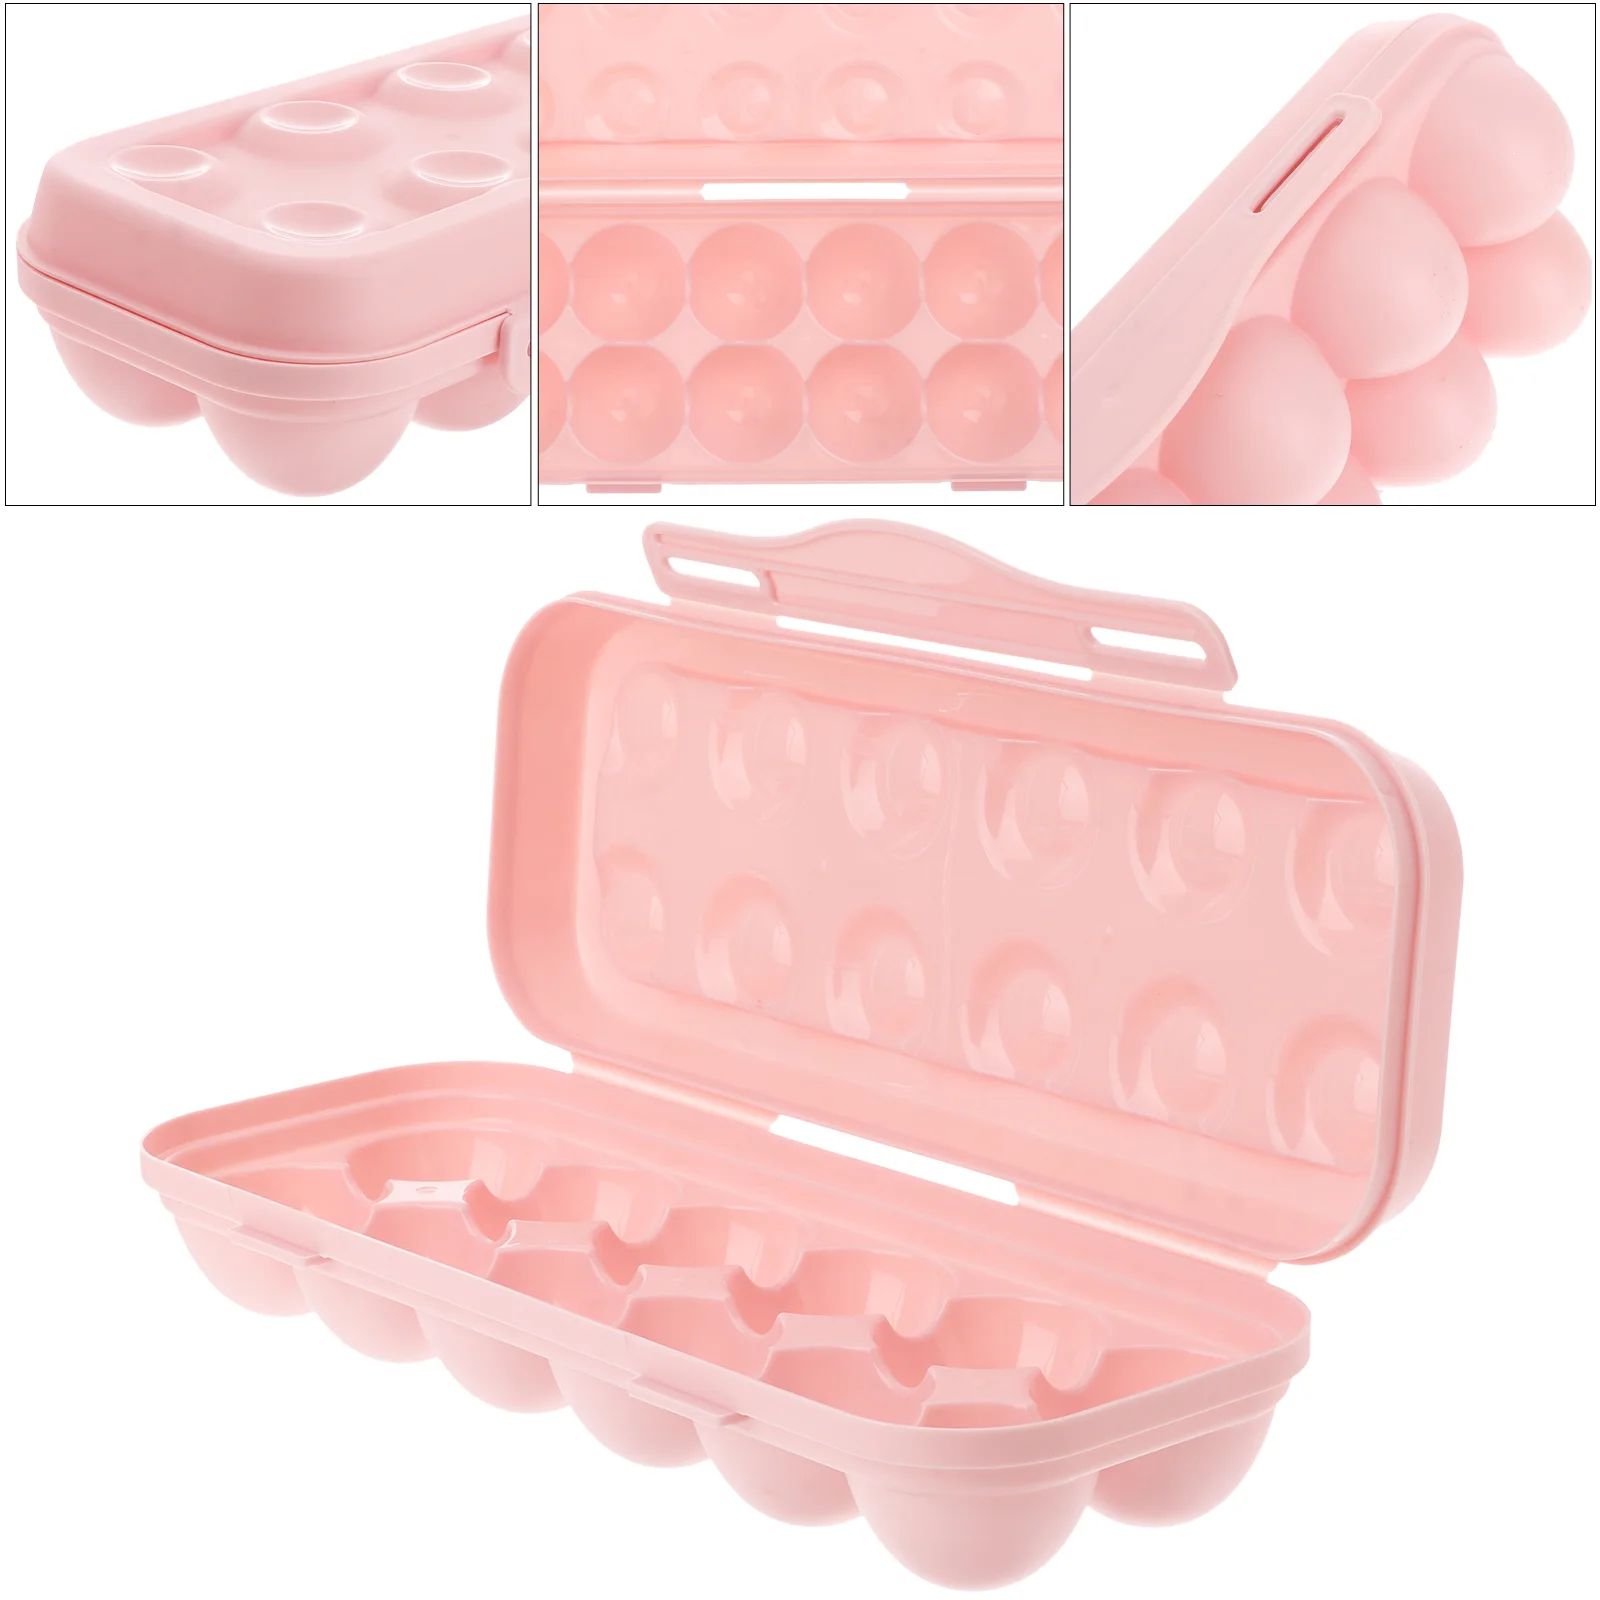 

Egg Holder Storage Refrigerator Tray Organizer Container Box Plastic Fridge Bins Deviled Carrier Stackable Lid Case Fresh Grids